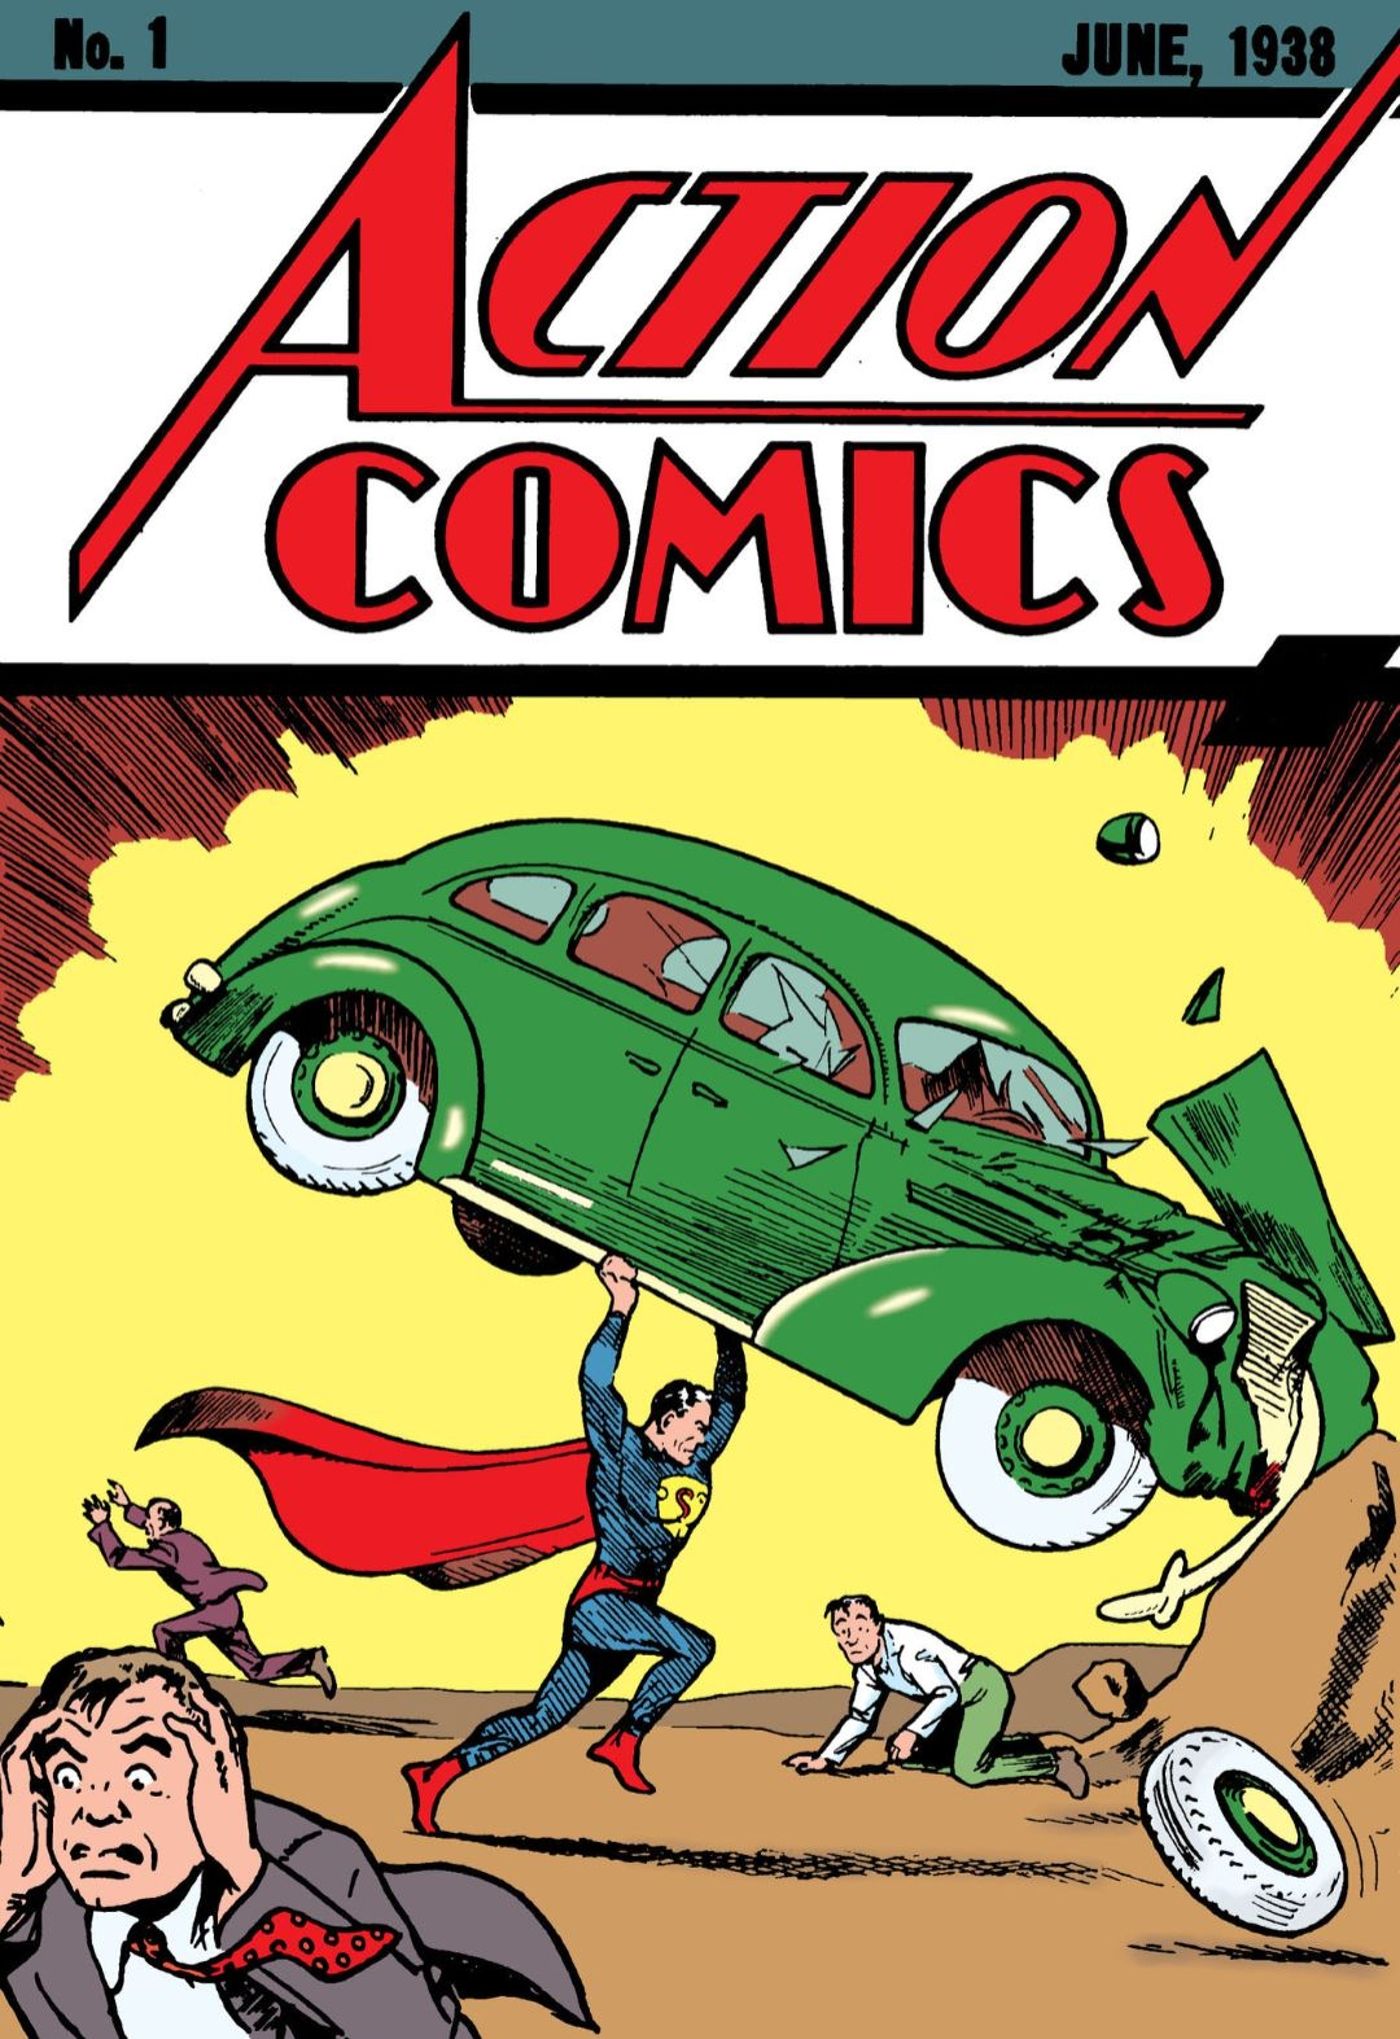 Action Comics 1 Cover DC